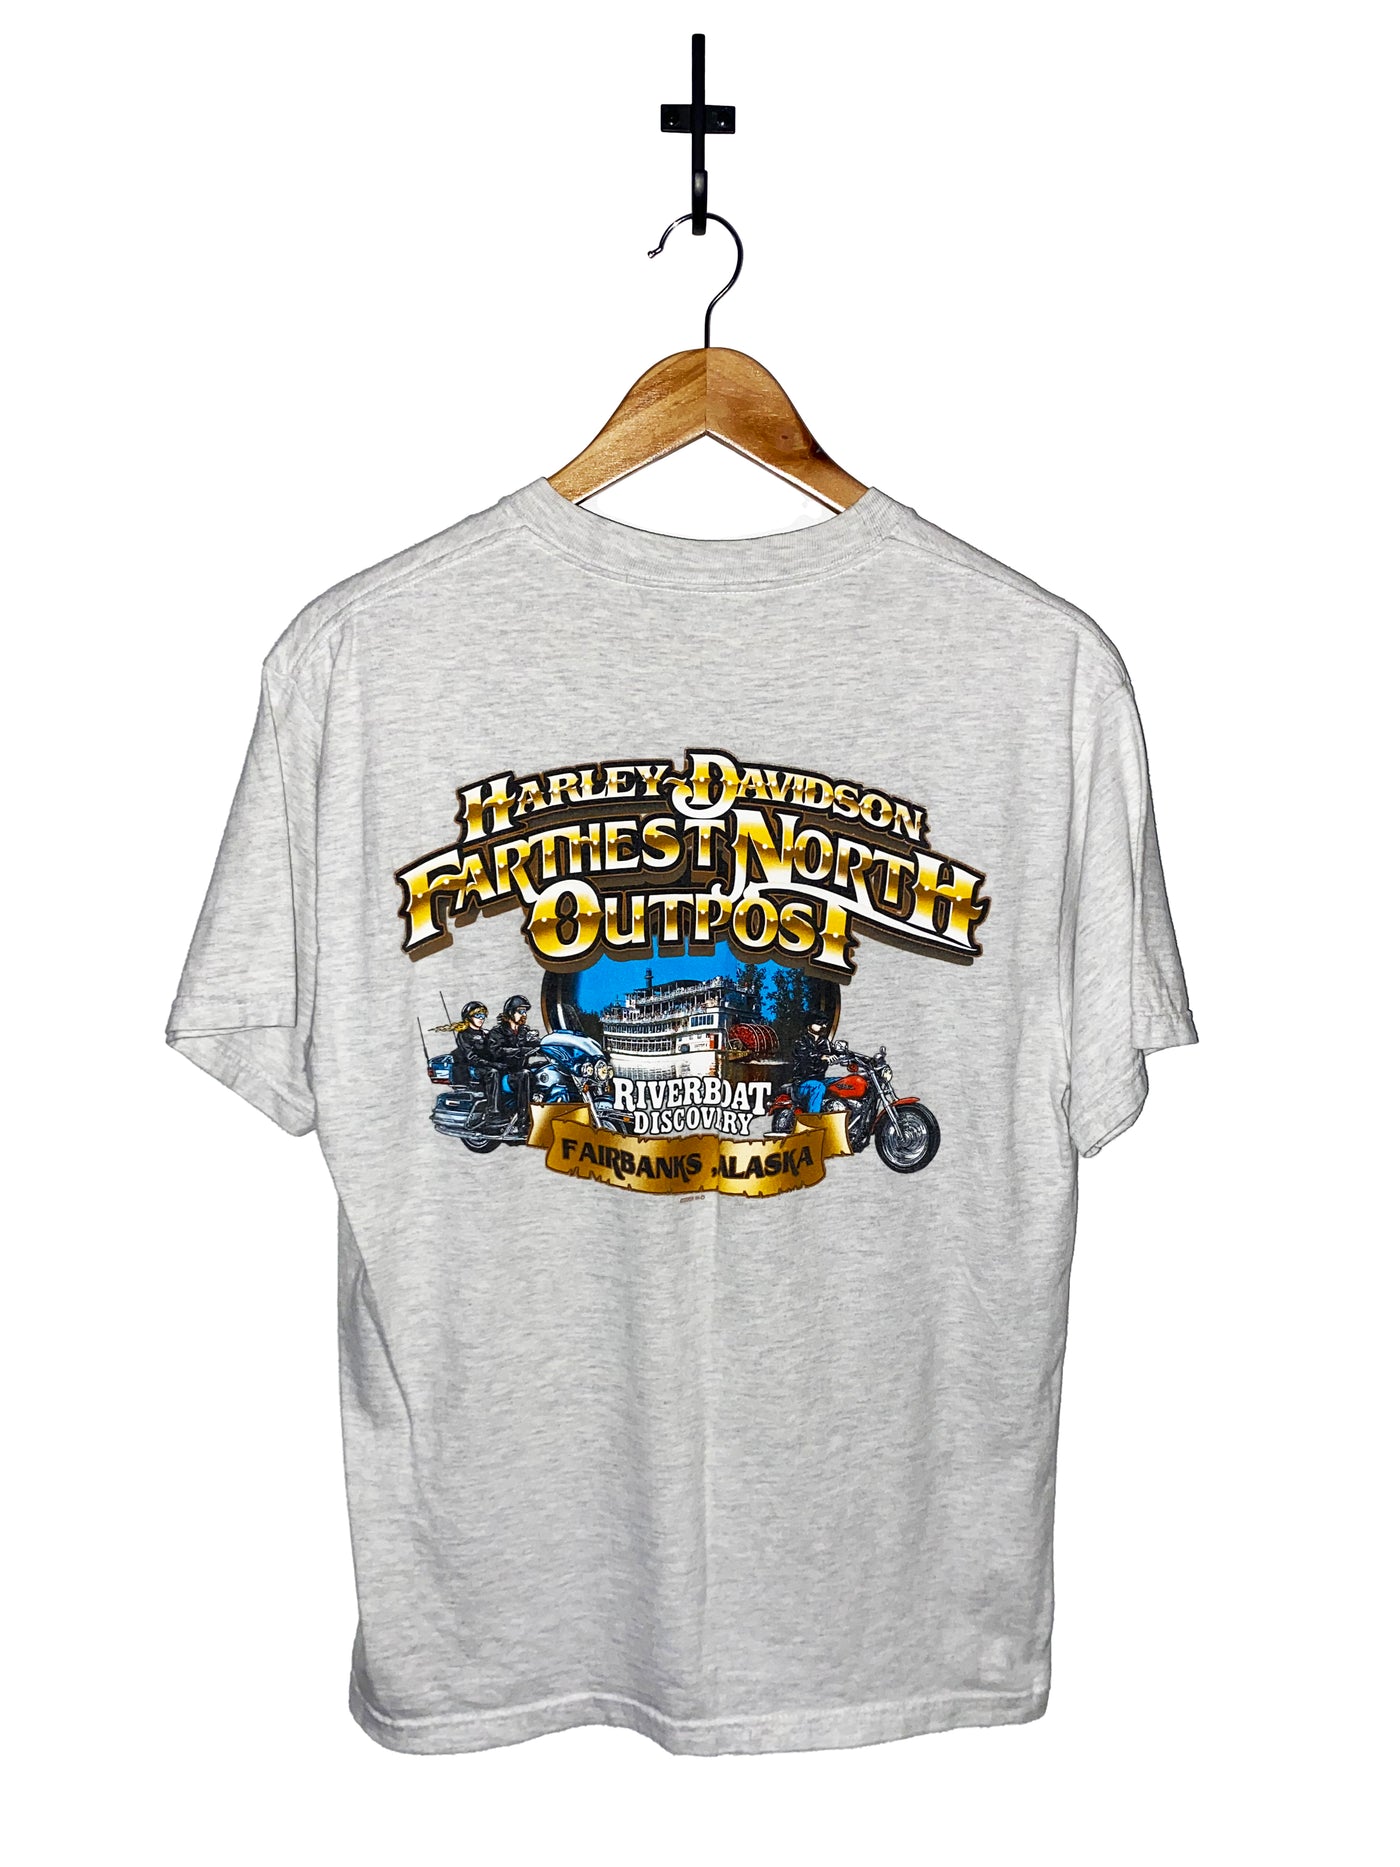 Vintage 2000s Harley Davidson Alaska T-Shirt